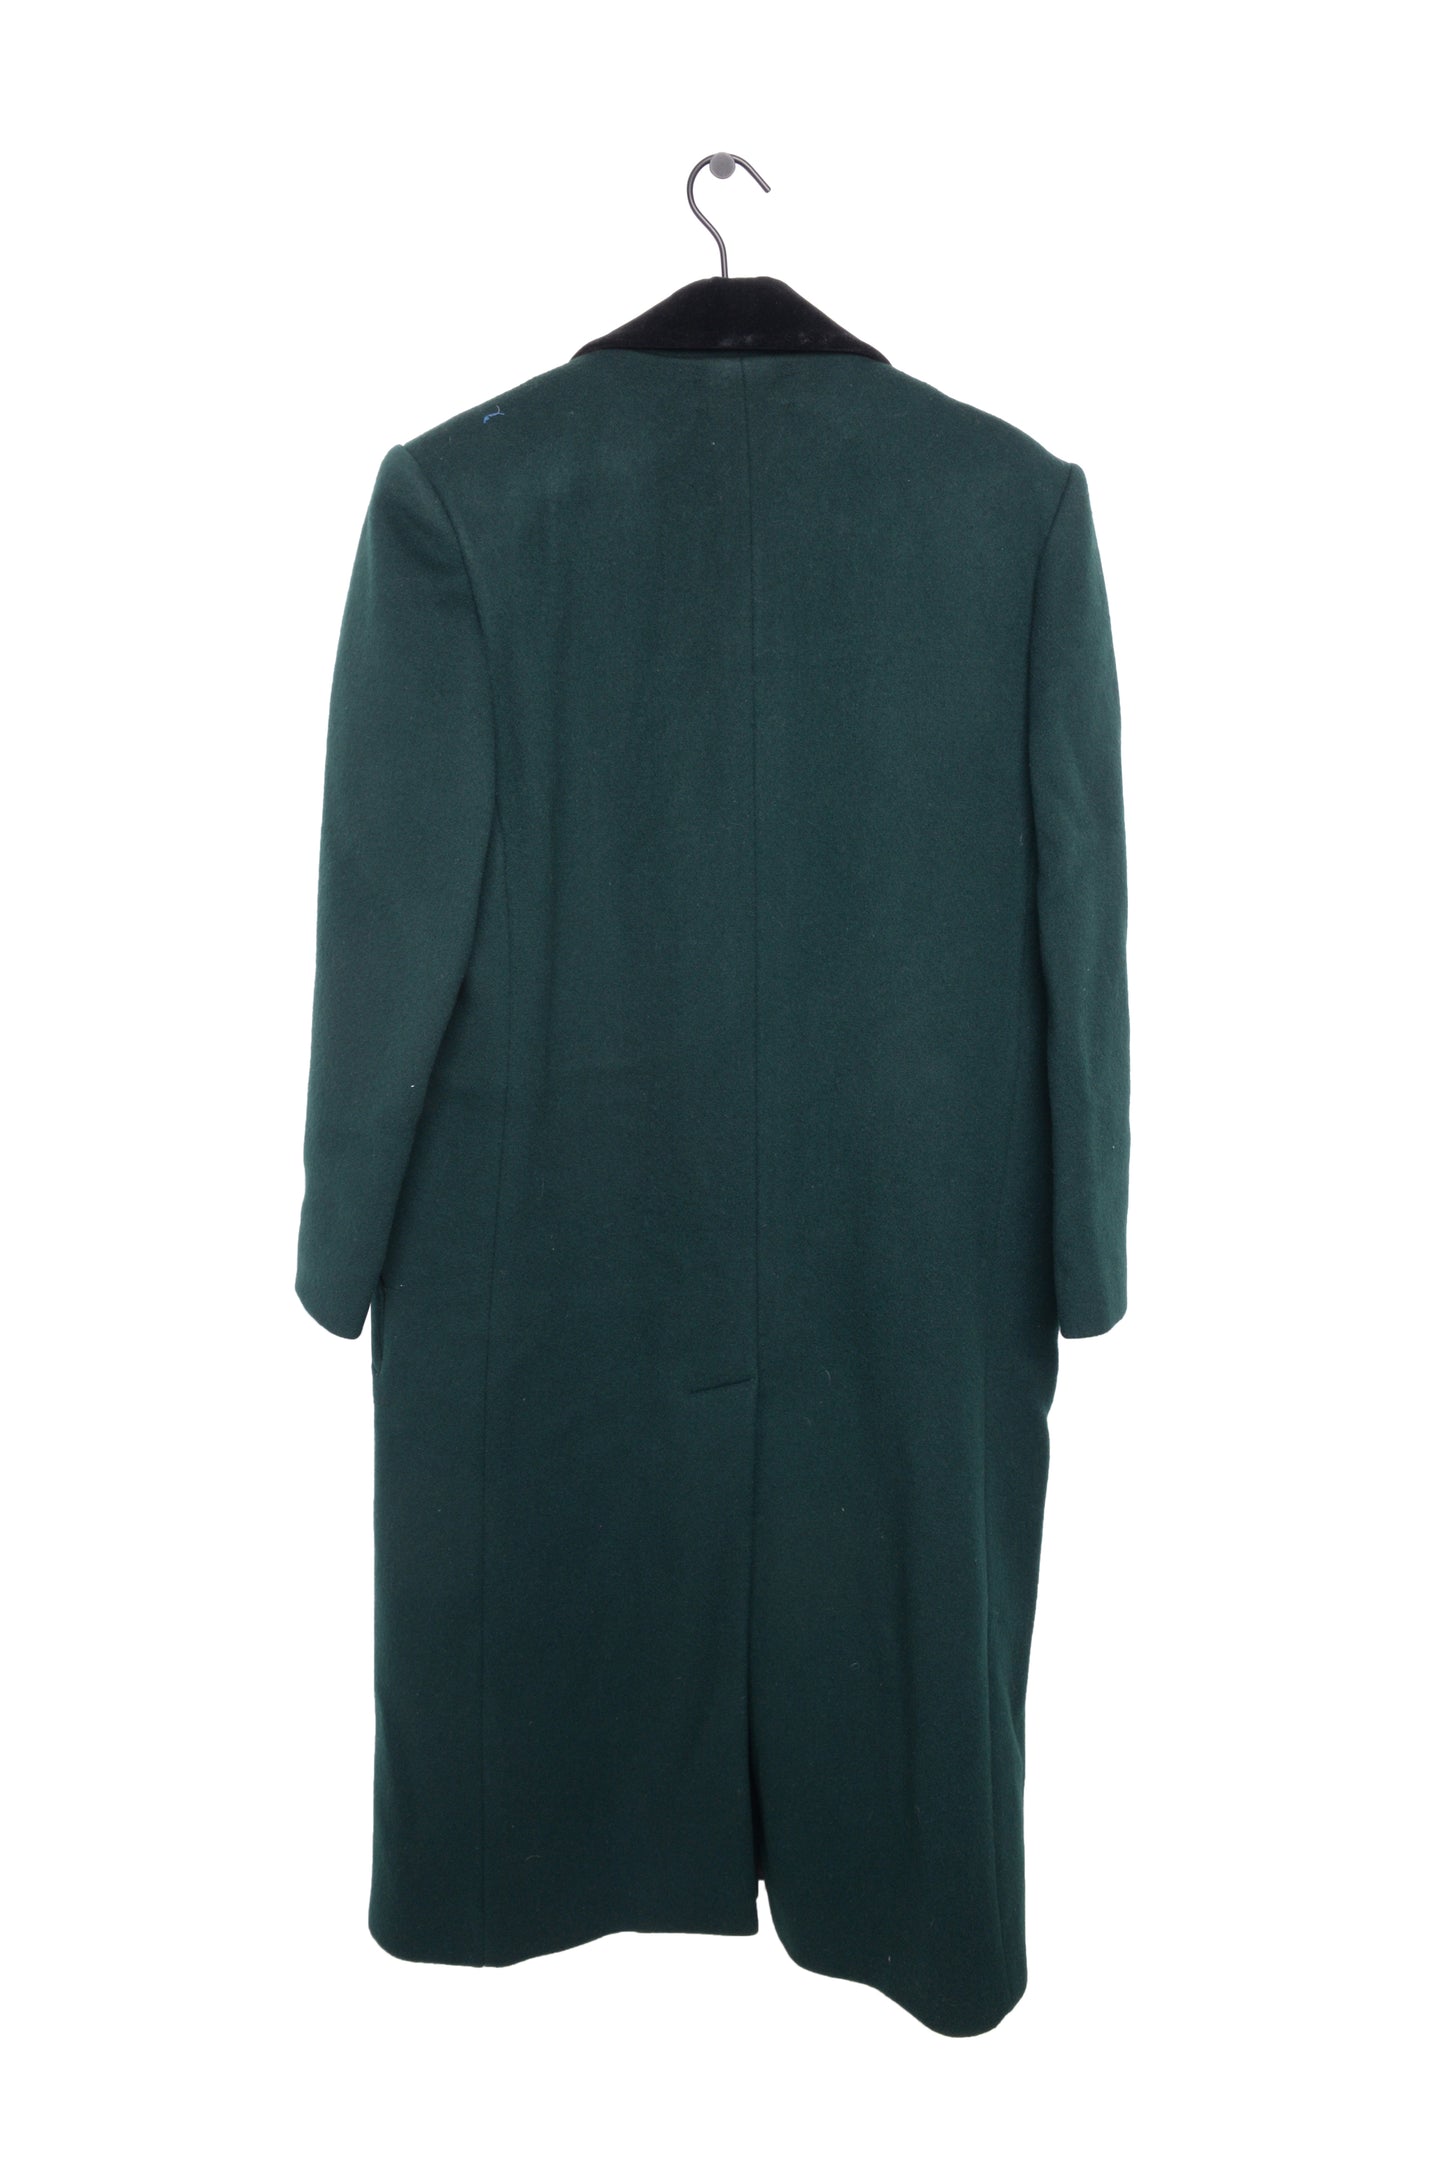 Green Wool Long Coat USA